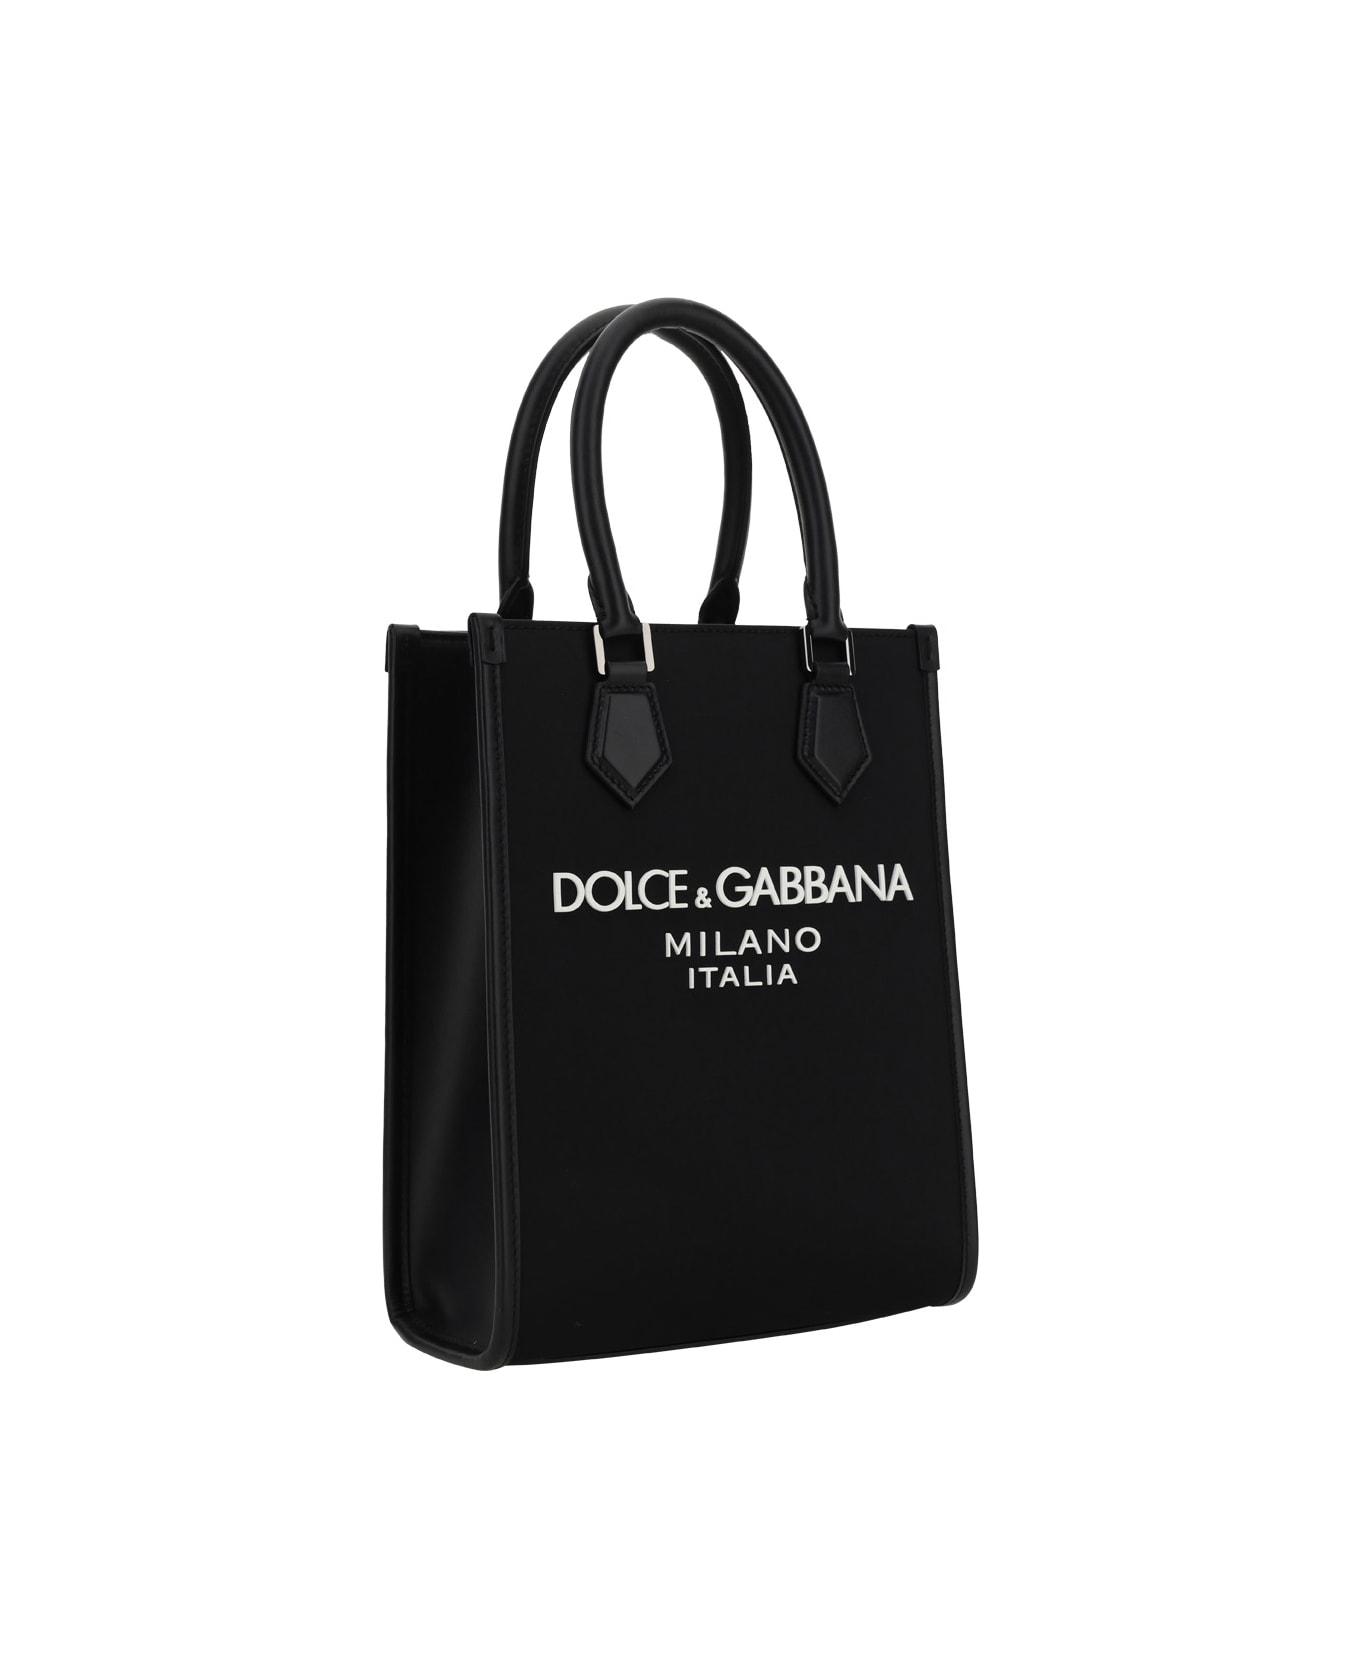 Dolce & Gabbana Shopping Bag - Nero/nero